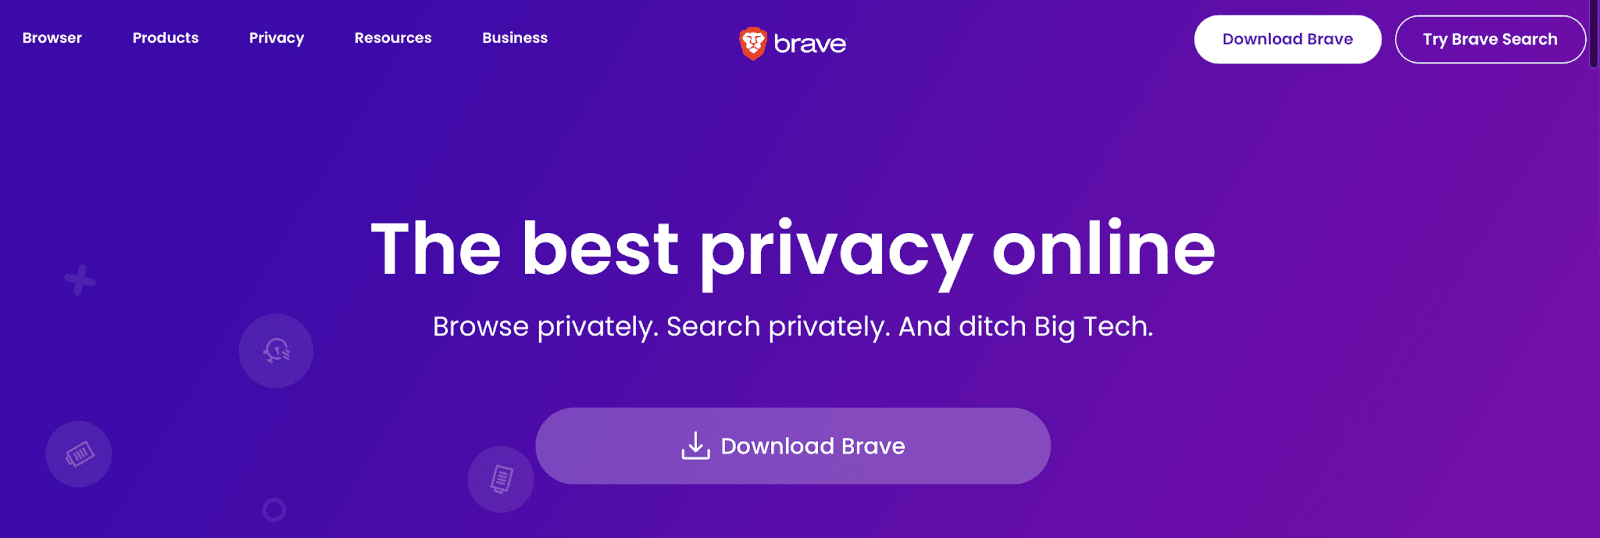 Brave browser homepage